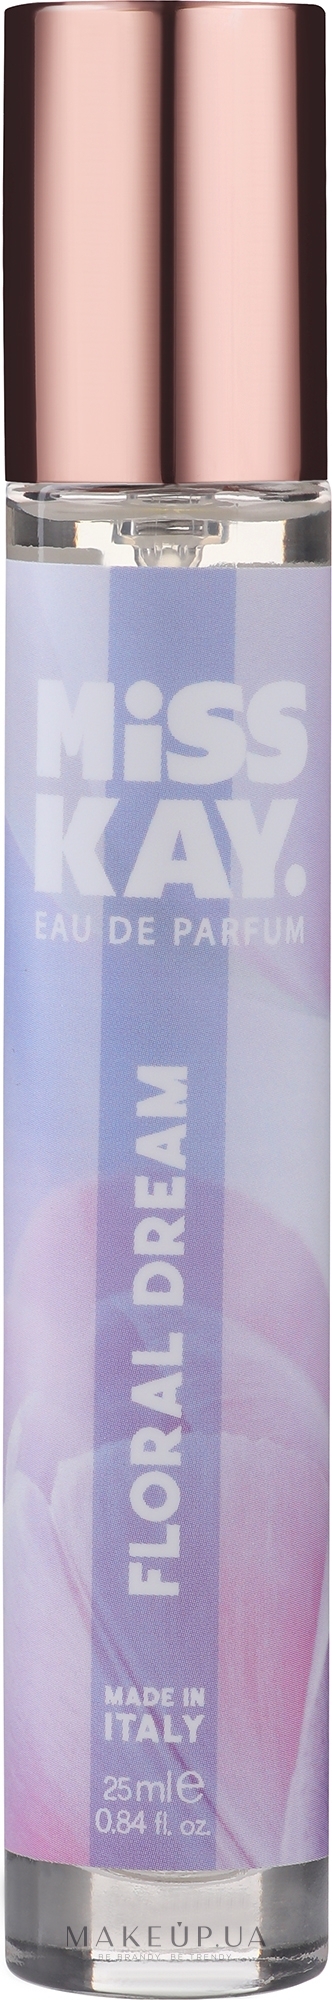 Miss Kay Floral Dream - Парфюмированная вода — фото 25ml